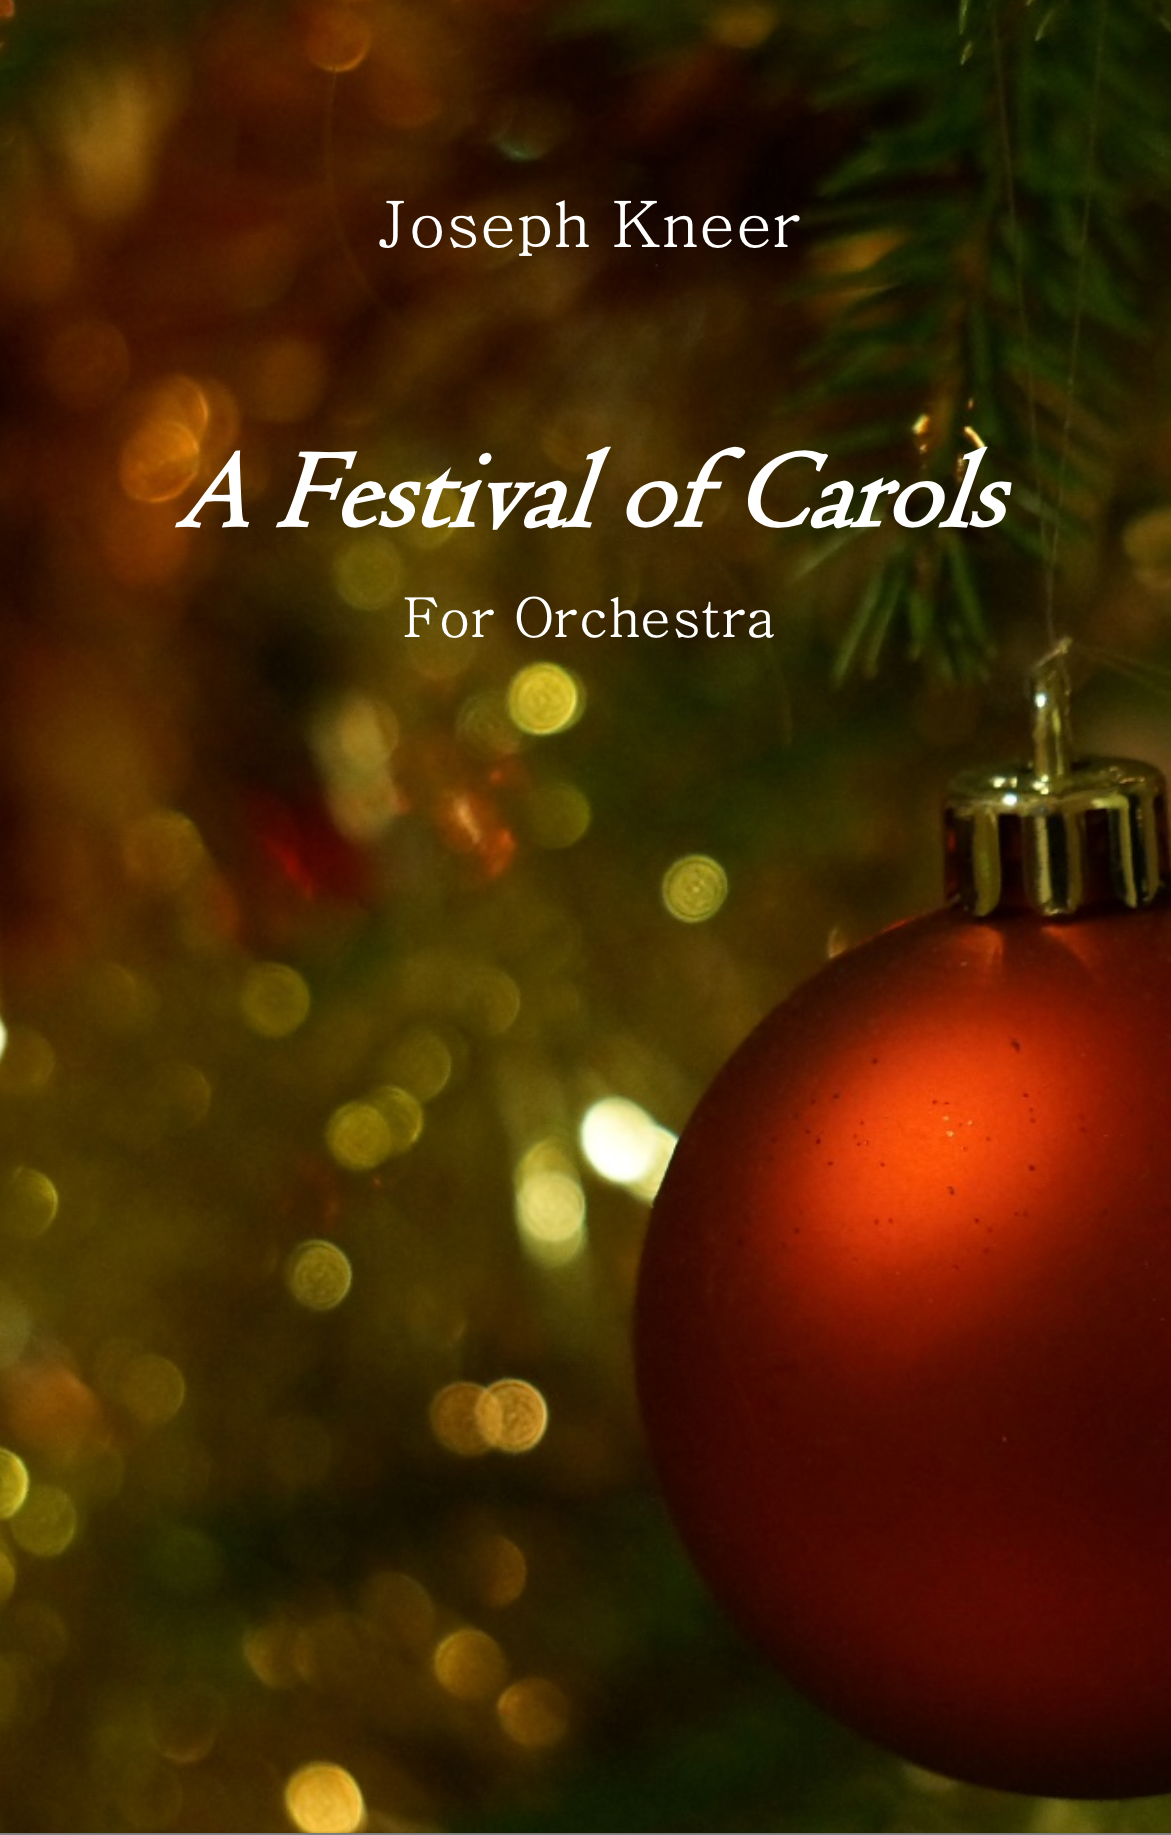 A Festival Of Carols by Joseph Kneer